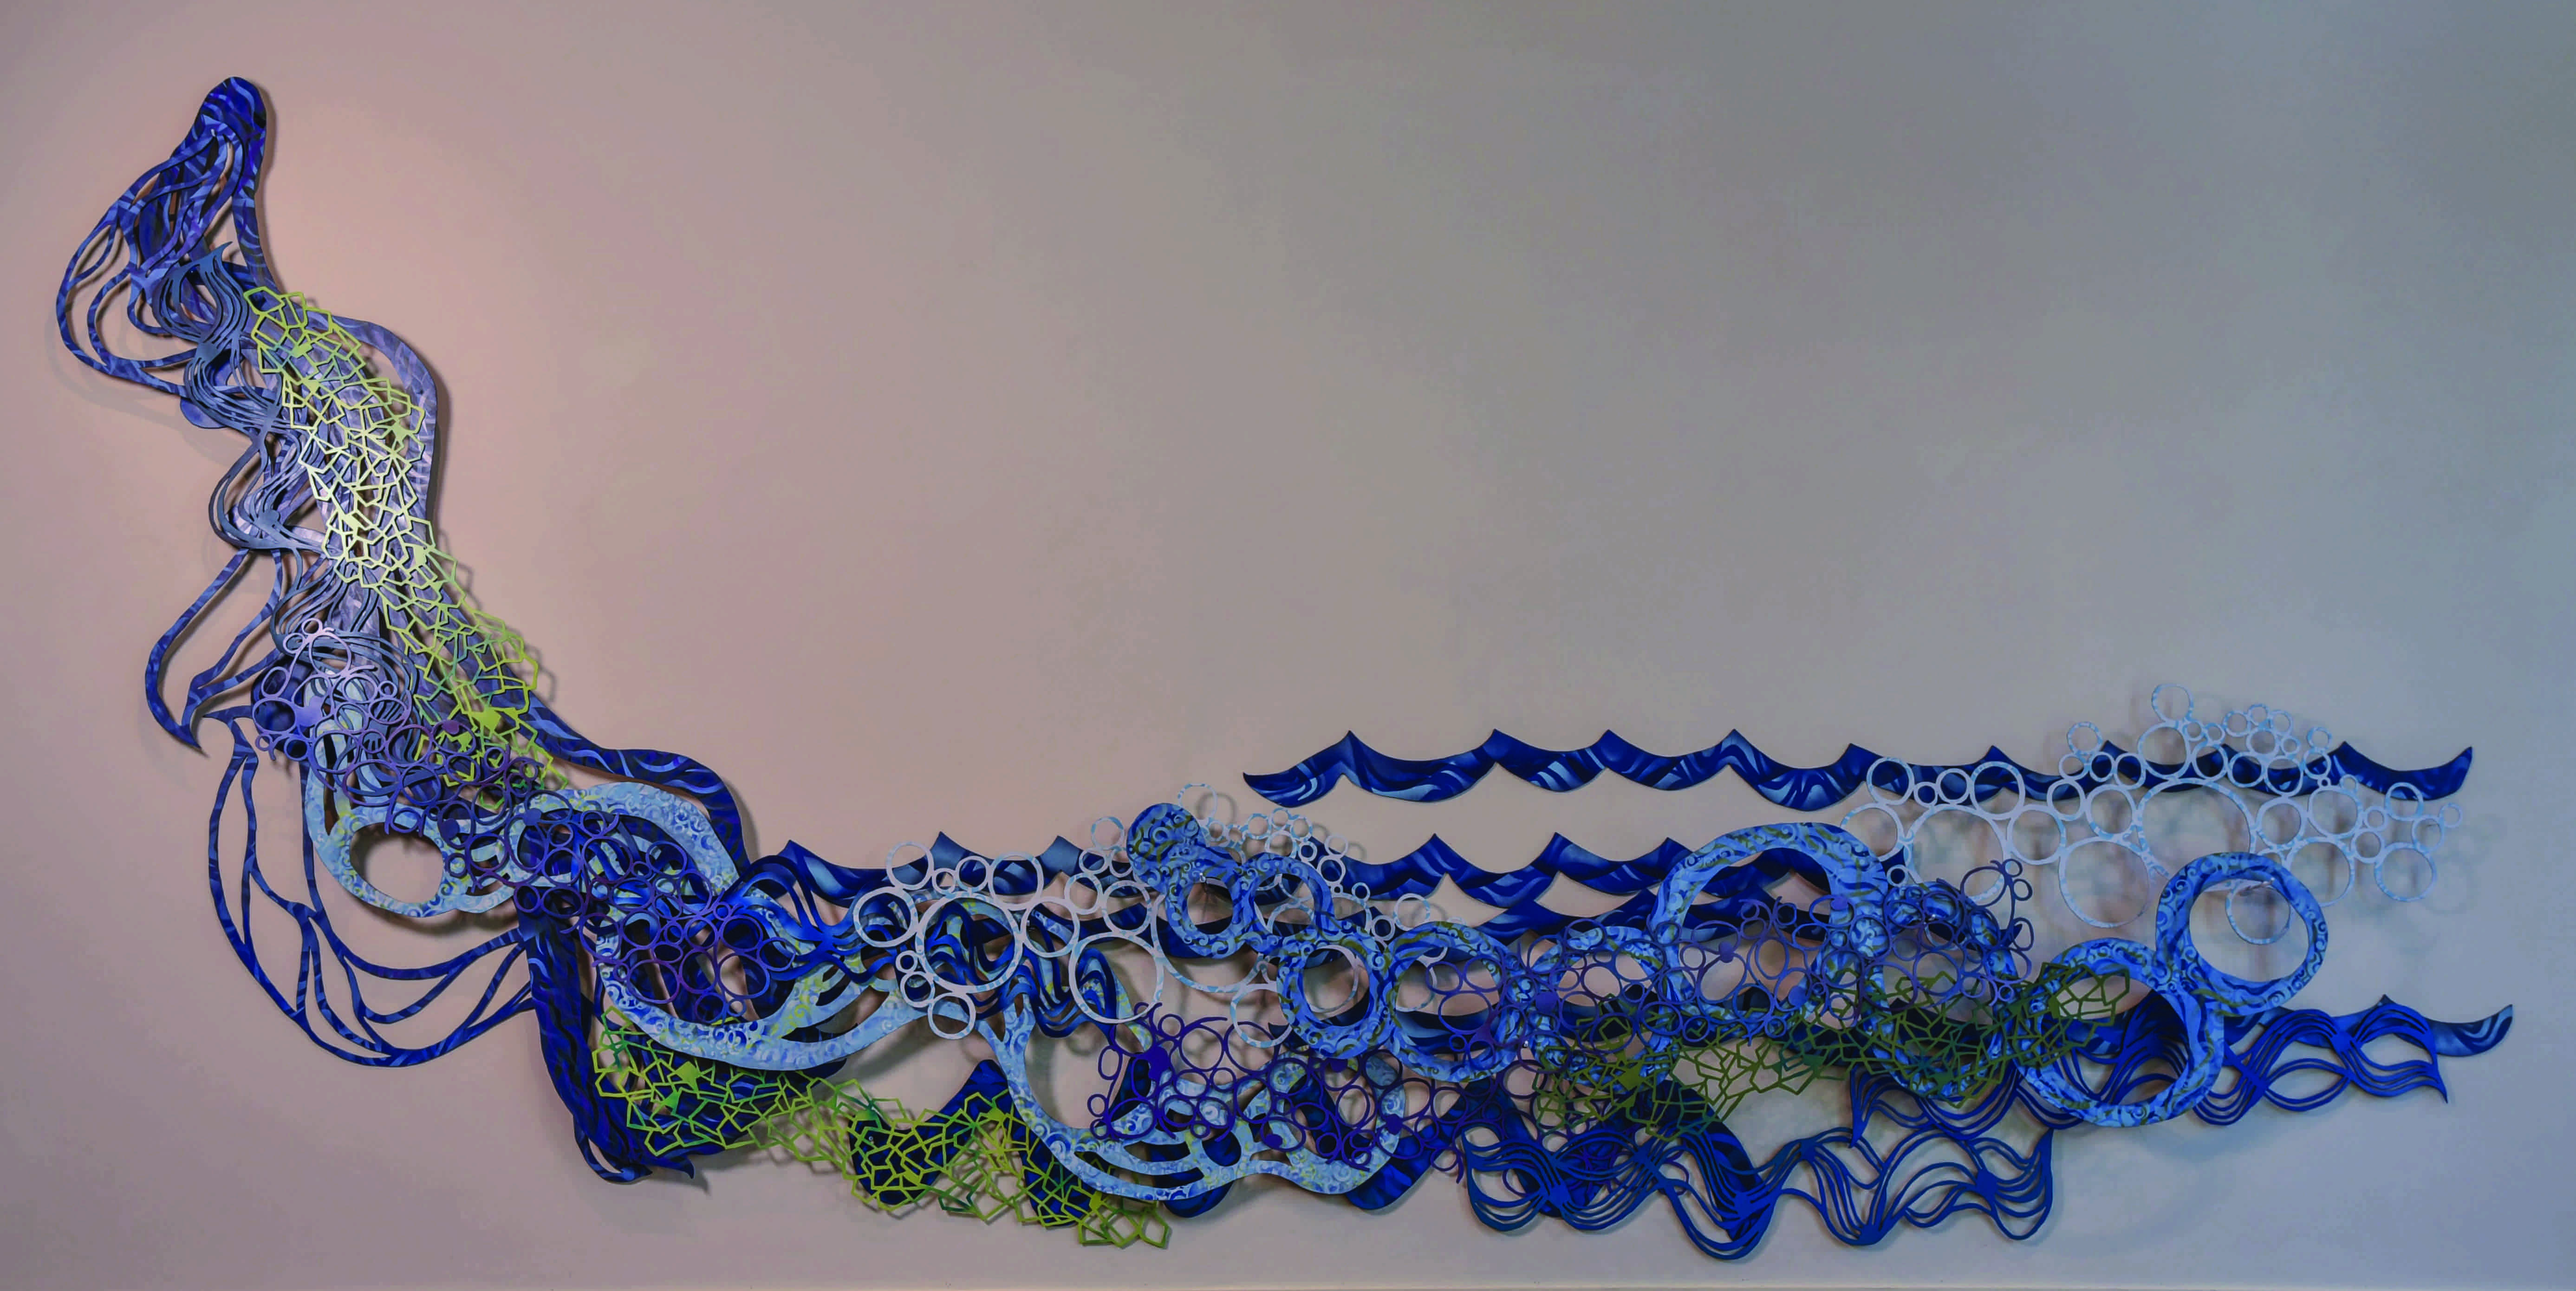 River Run,” a sculpture by artist June Sekiguchi, is made of enamel on scroll cut hardboard.